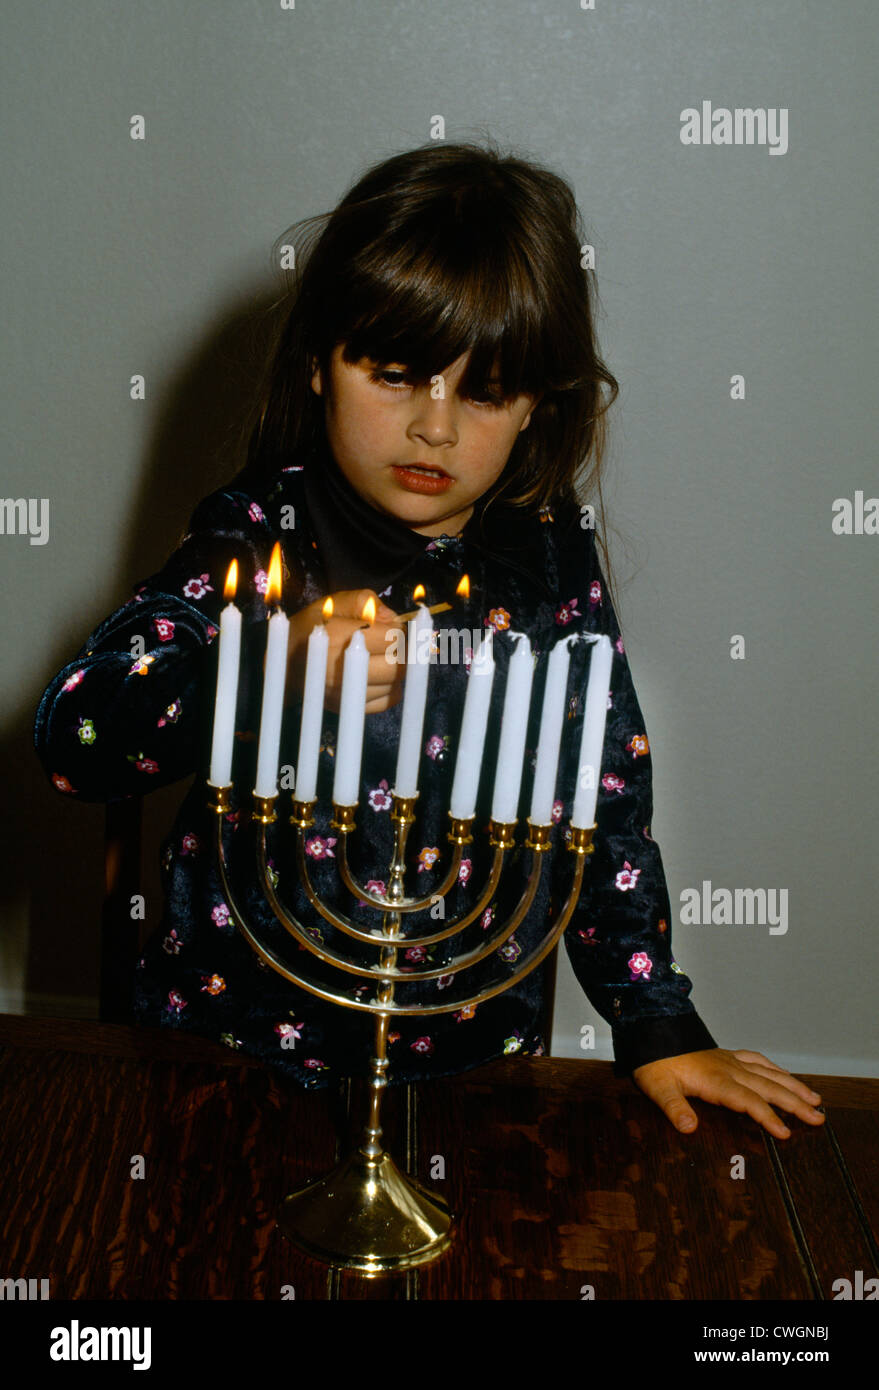 Menorah Child Lighting Candles Stock Photo